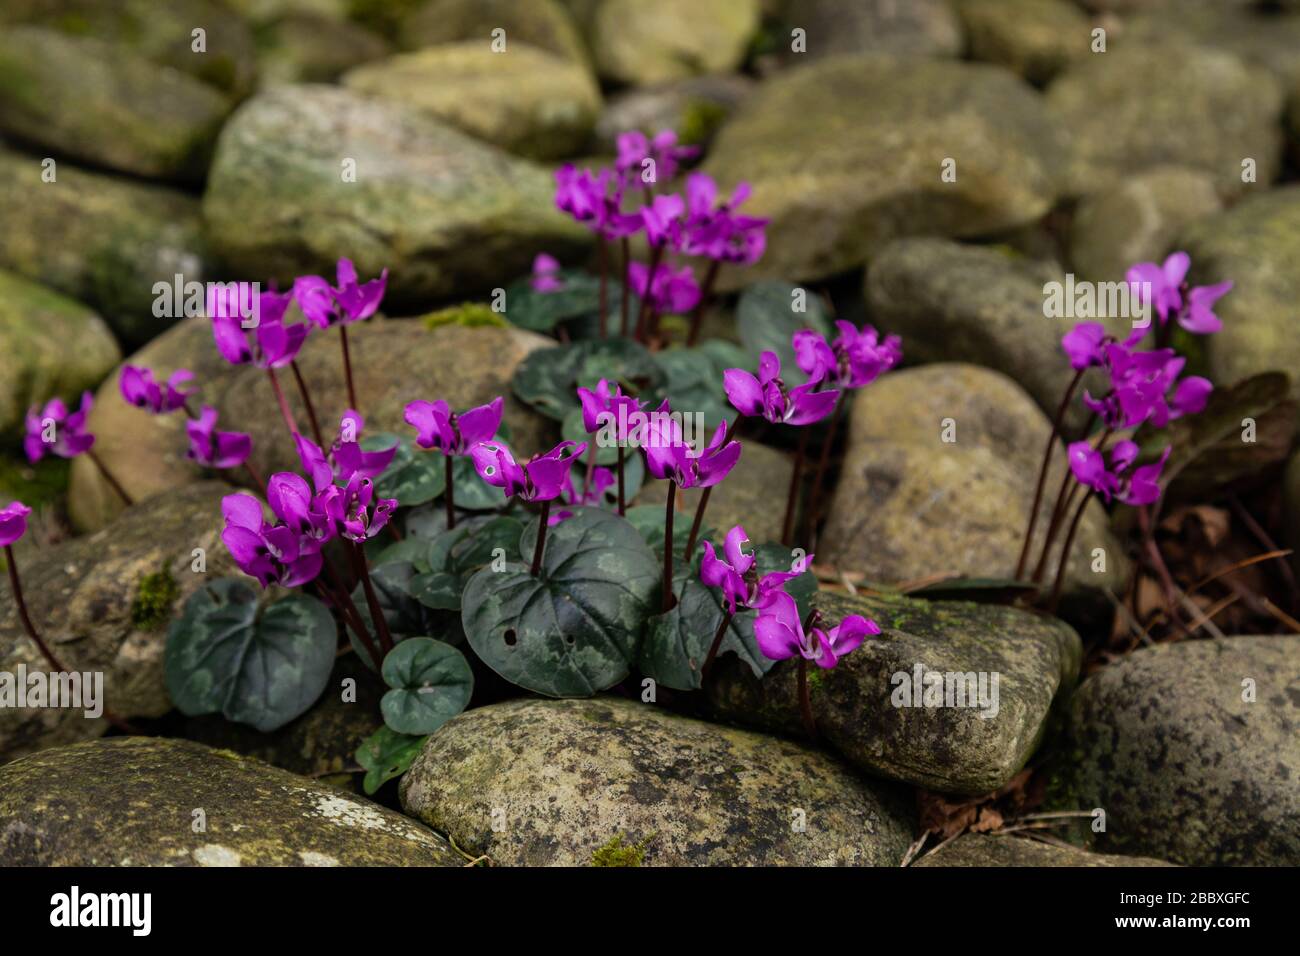 Hardy purple cyclamen flowers growing through large pebbles. Stock Photo